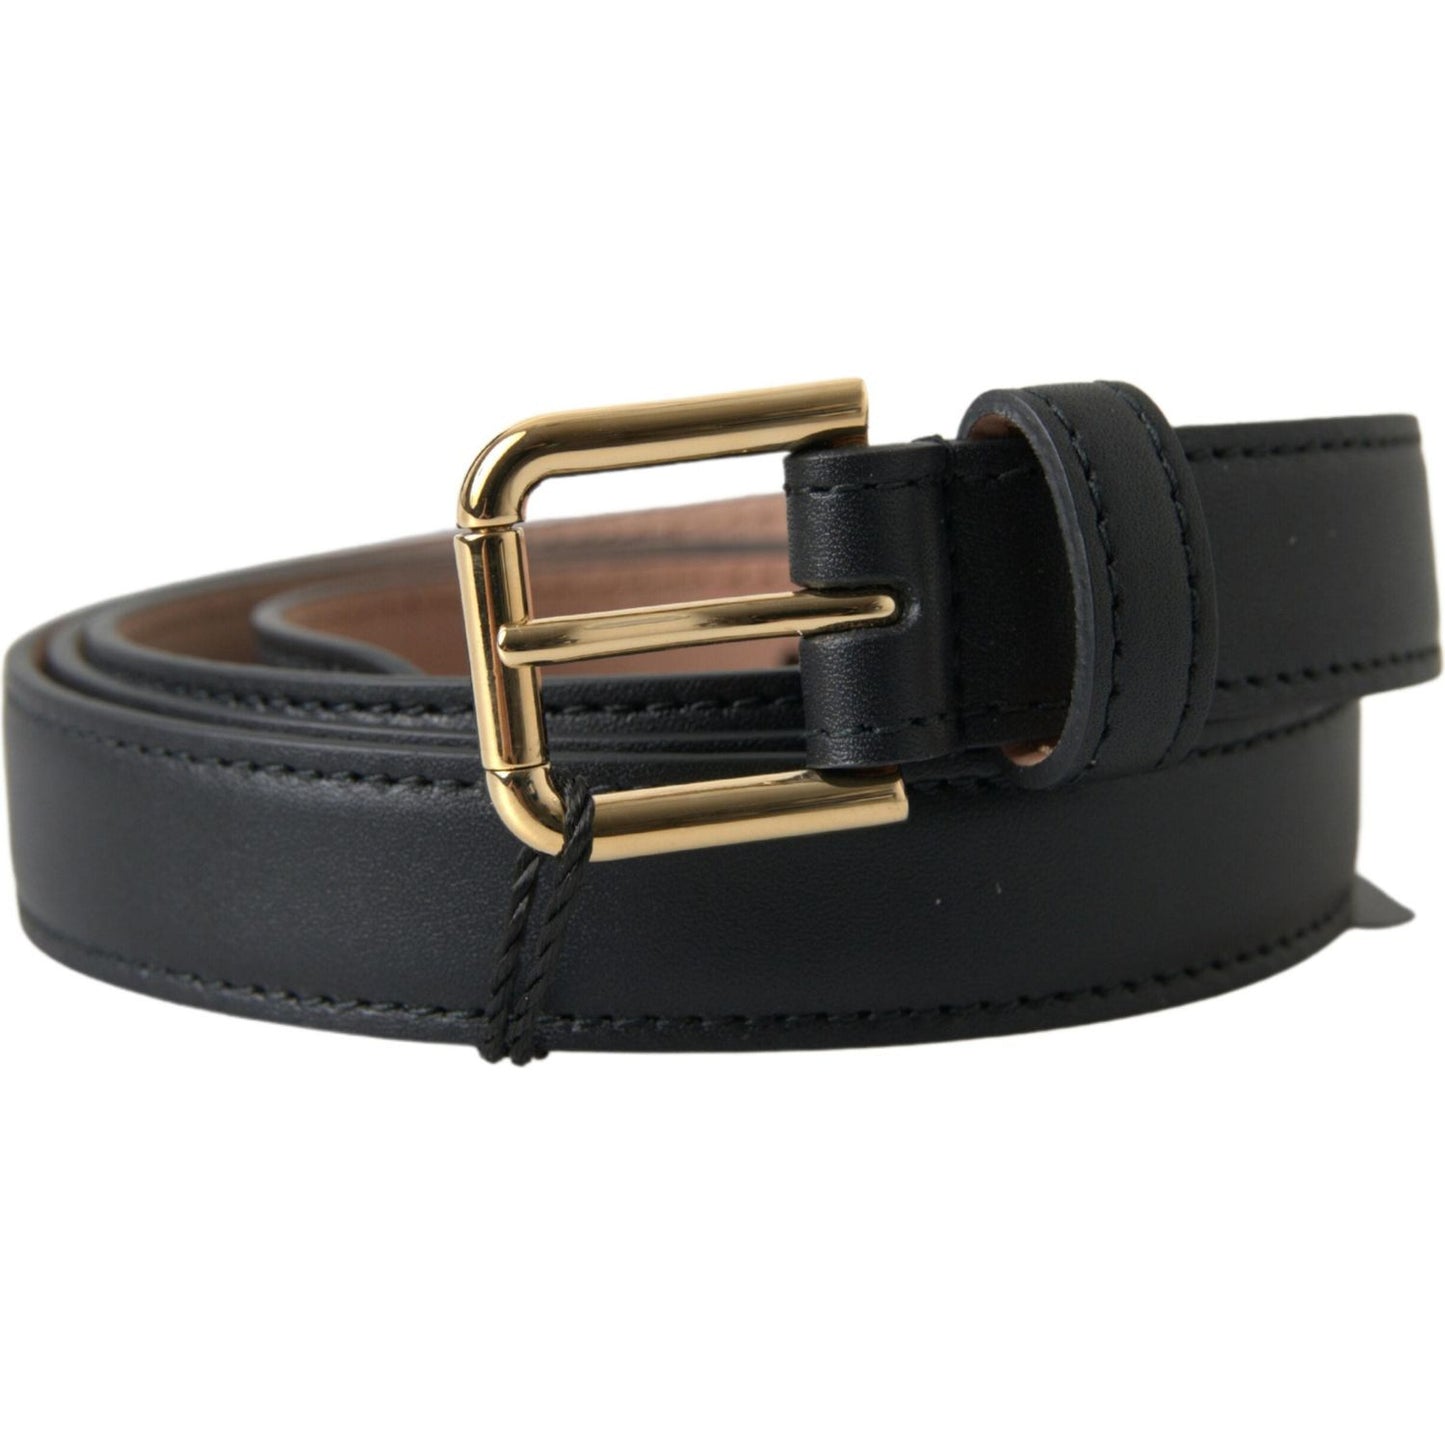 Dolce & Gabbana Elegant Italian Leather Belt with Metal Buckle black-leather-gold-tone-metal-buckle-belt 465A1096-scaled-0a56d3b0-a32.jpg